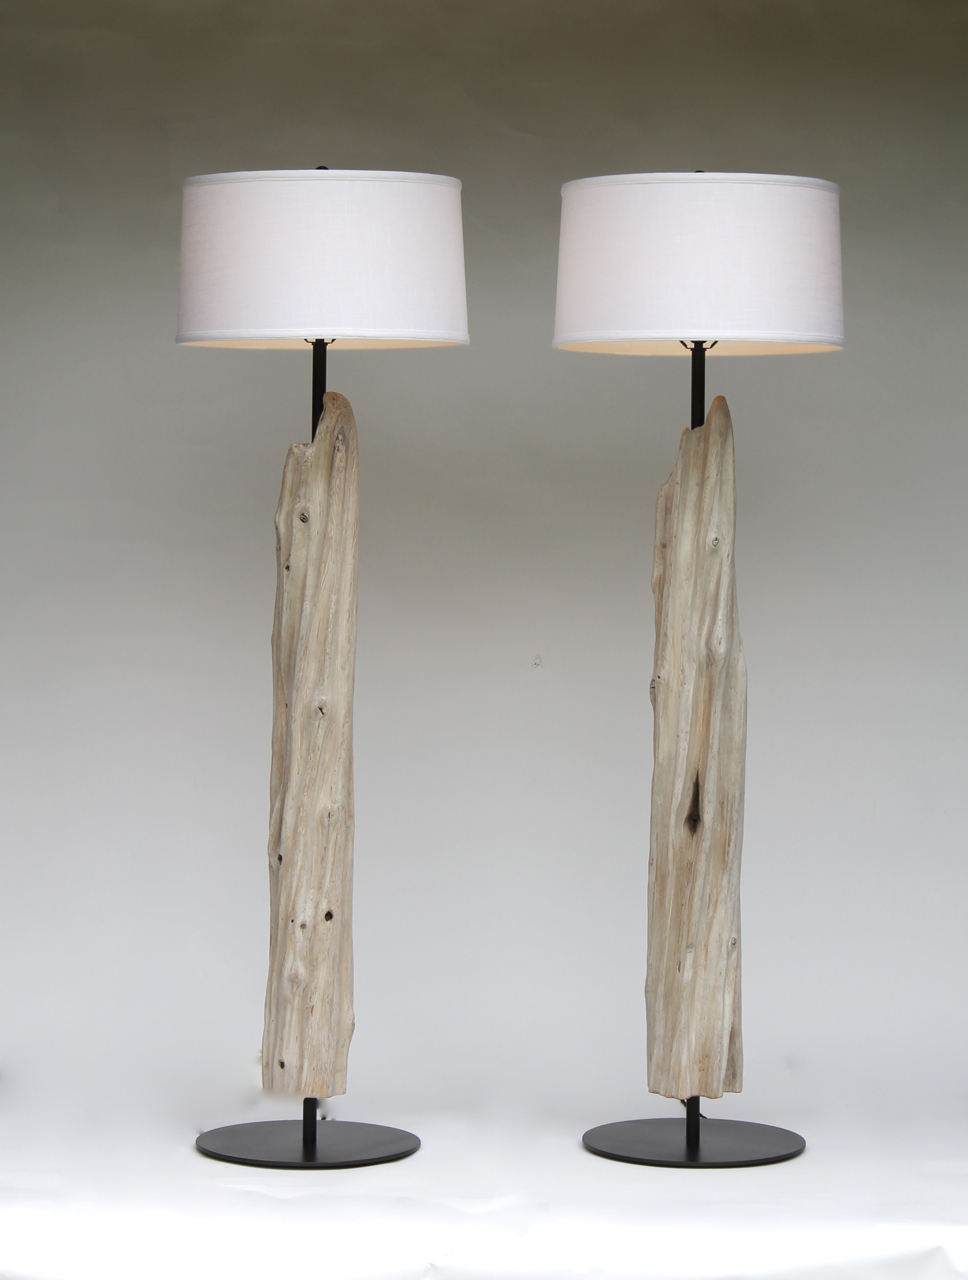 Driftwood Lighting Designs Adrift pertaining to measurements 968 X 1280